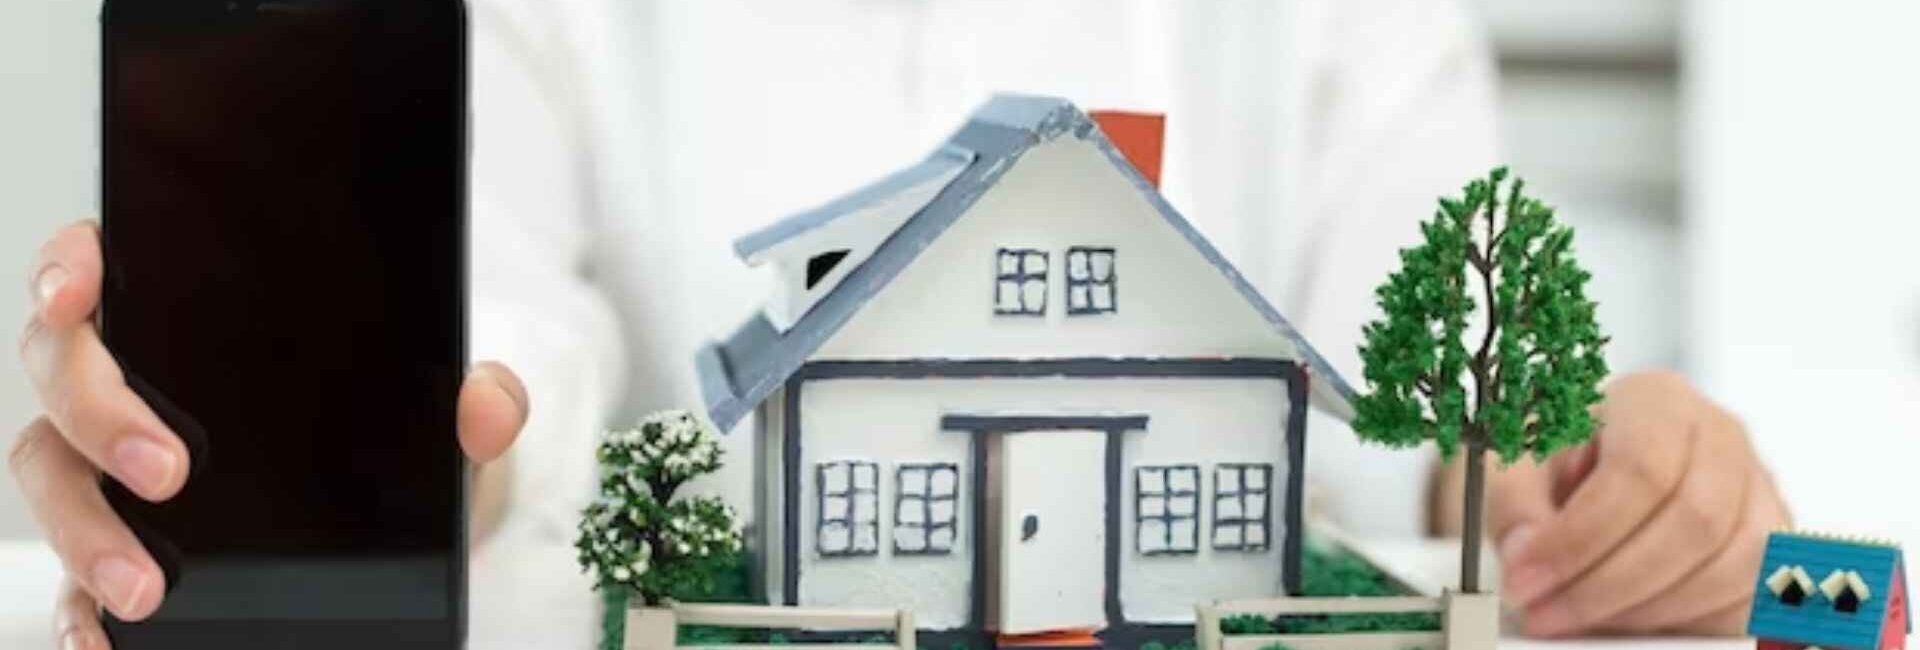 Mangal Estate - Real Estate Agents in Noida